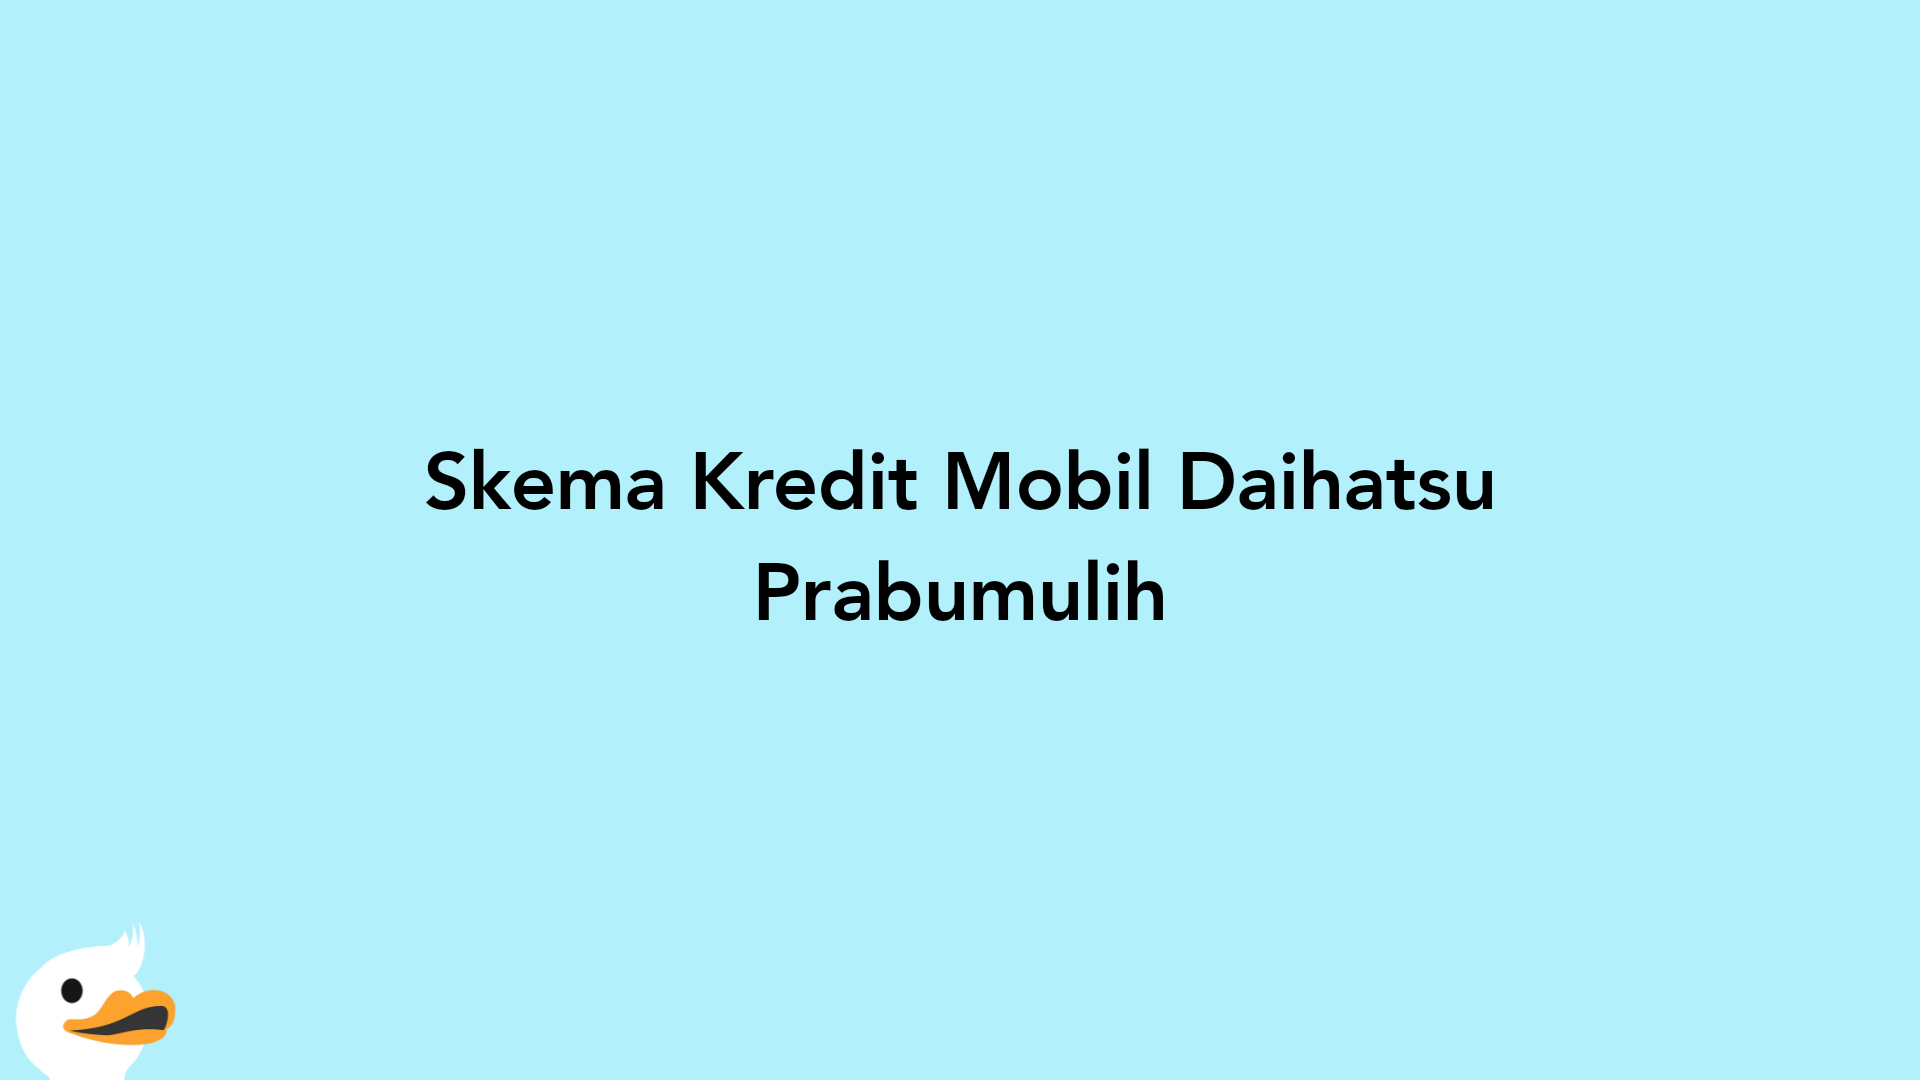 Skema Kredit Mobil Daihatsu Prabumulih